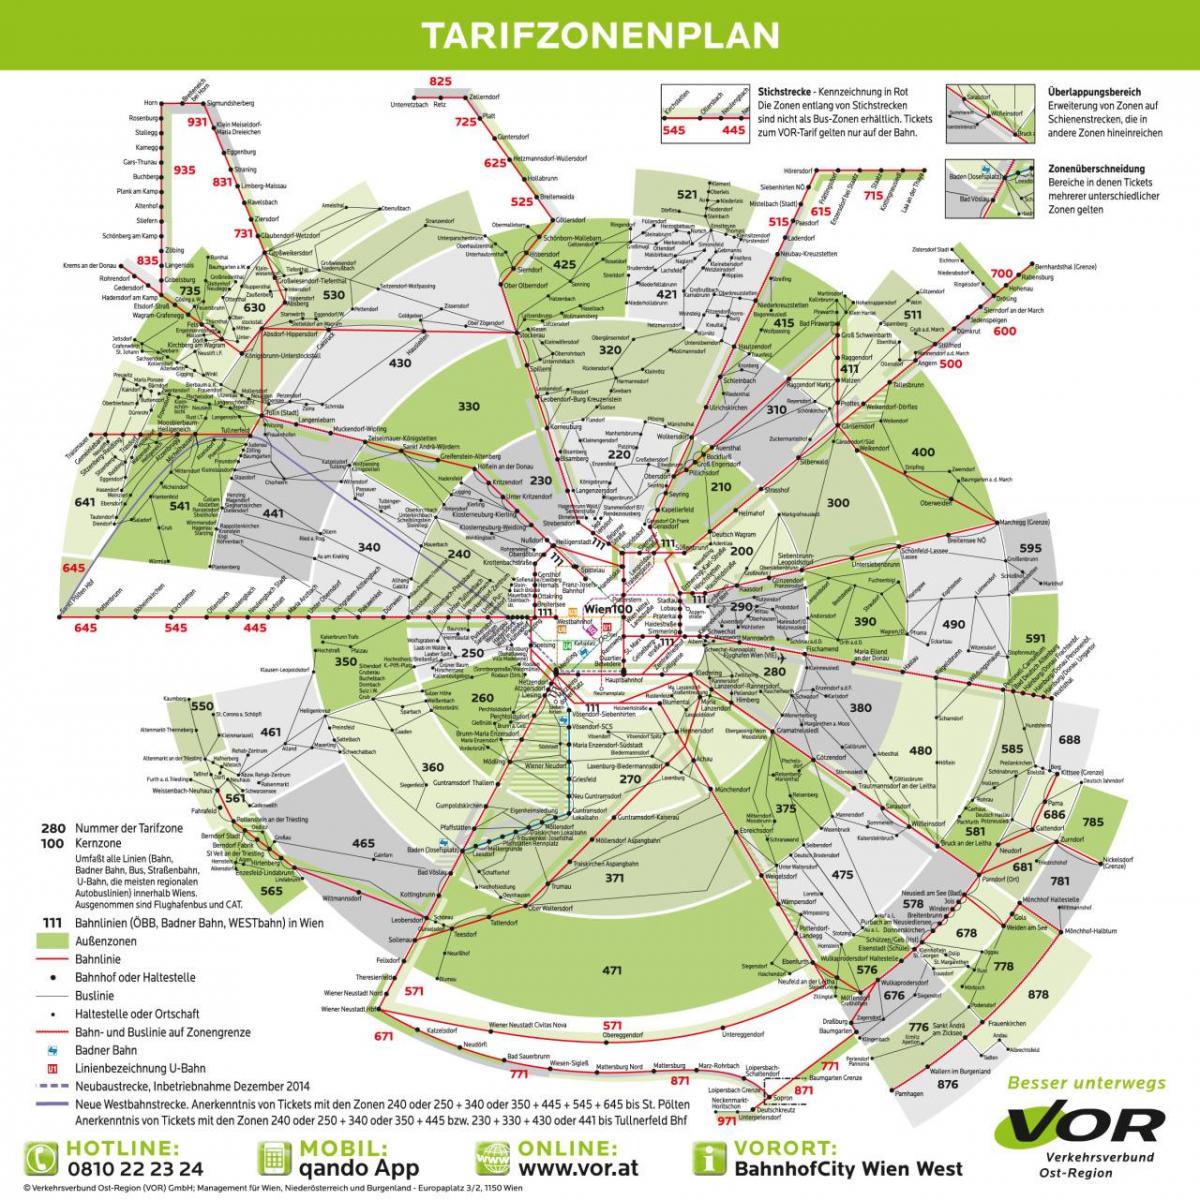 Kart over Wien transport soner